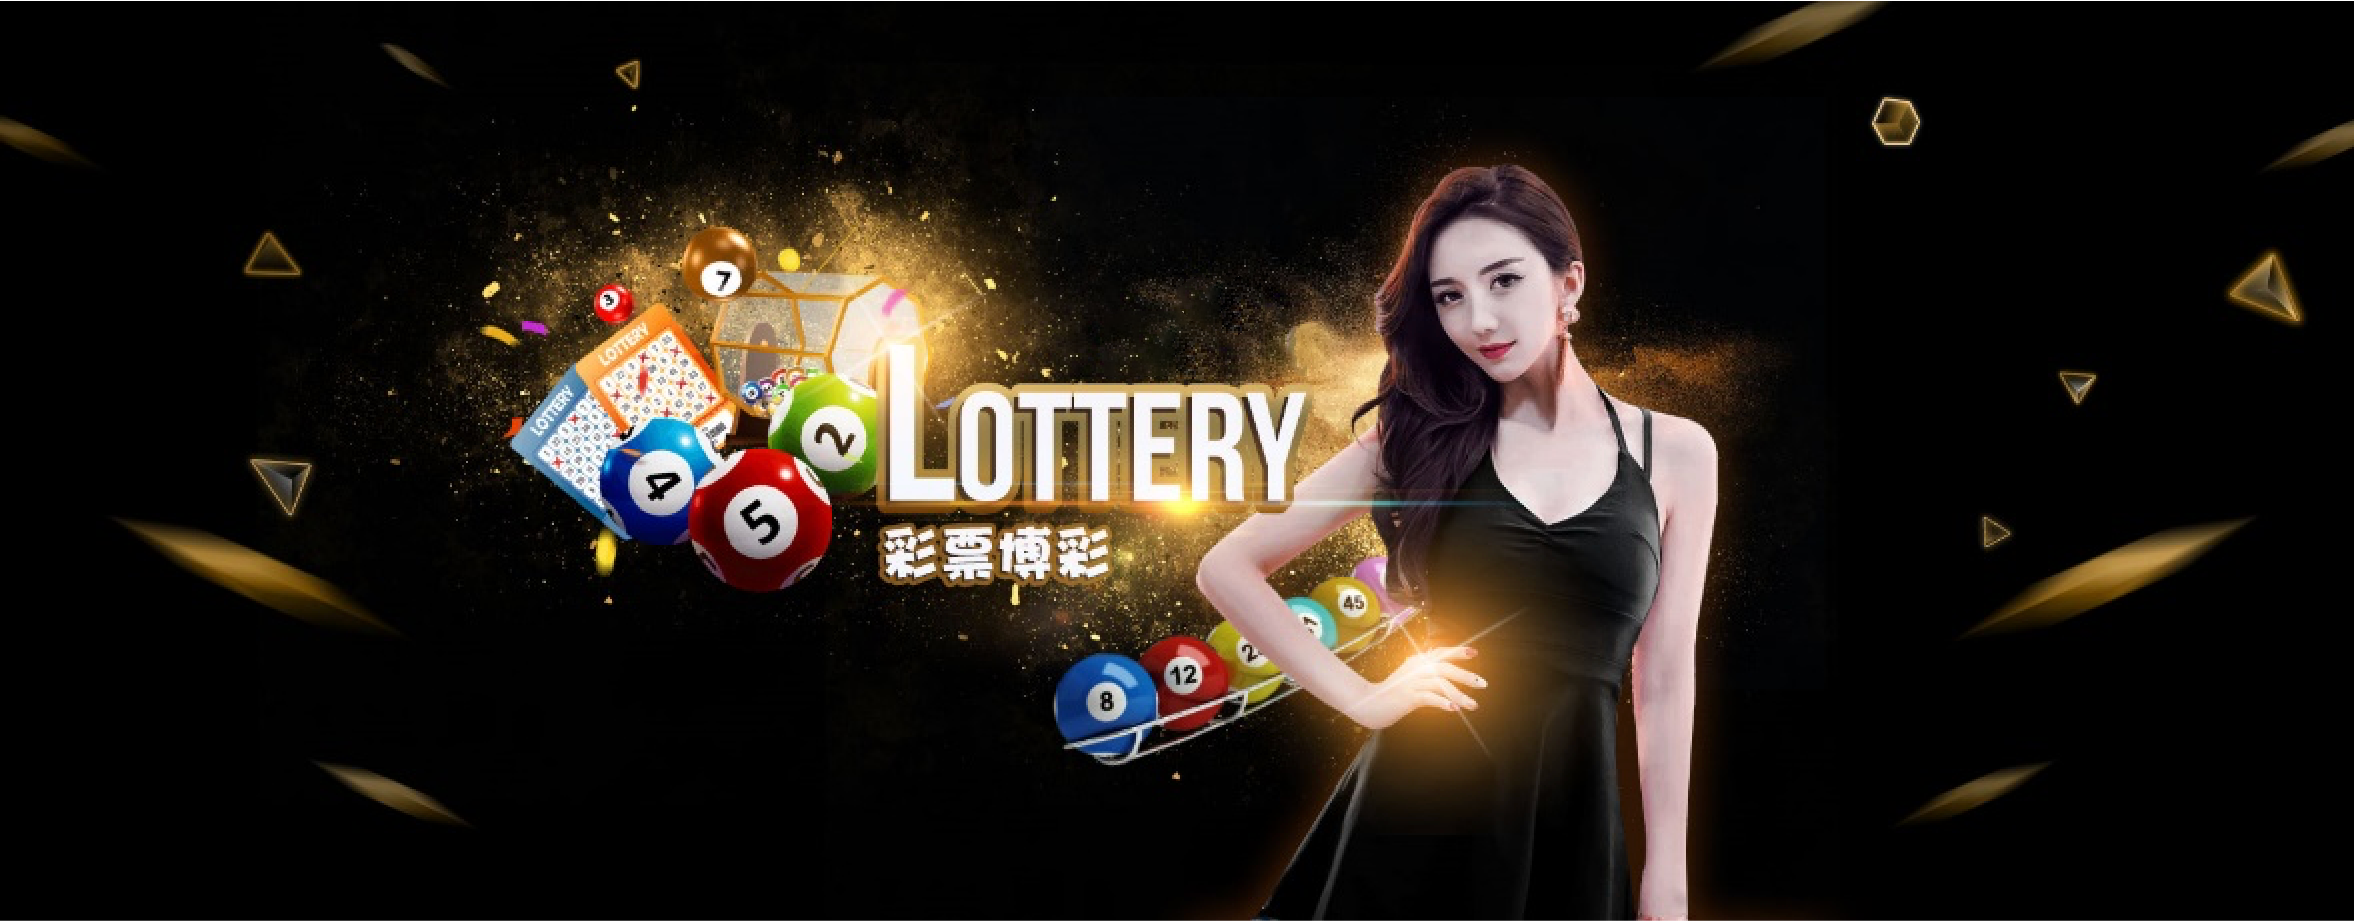 lottery 4d banner